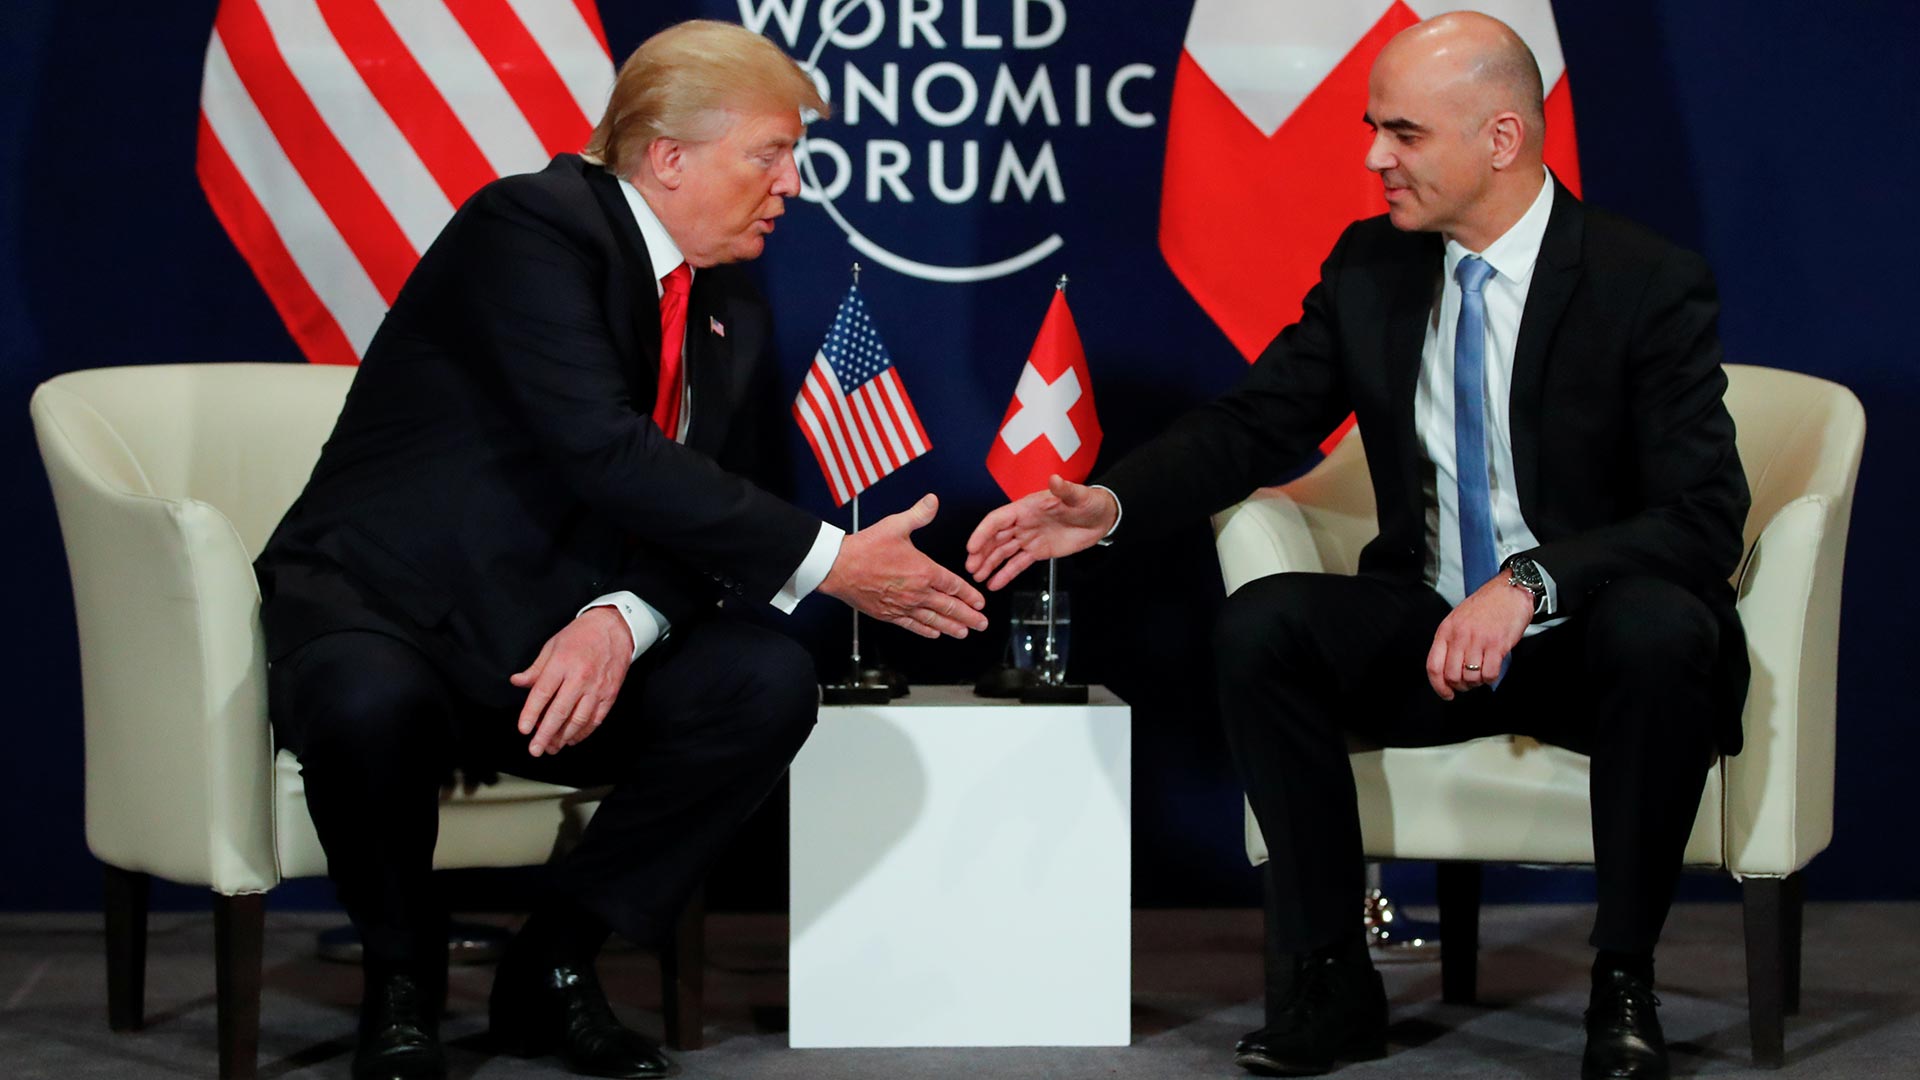 Trump, en Davos: "América primero no significa América solo"